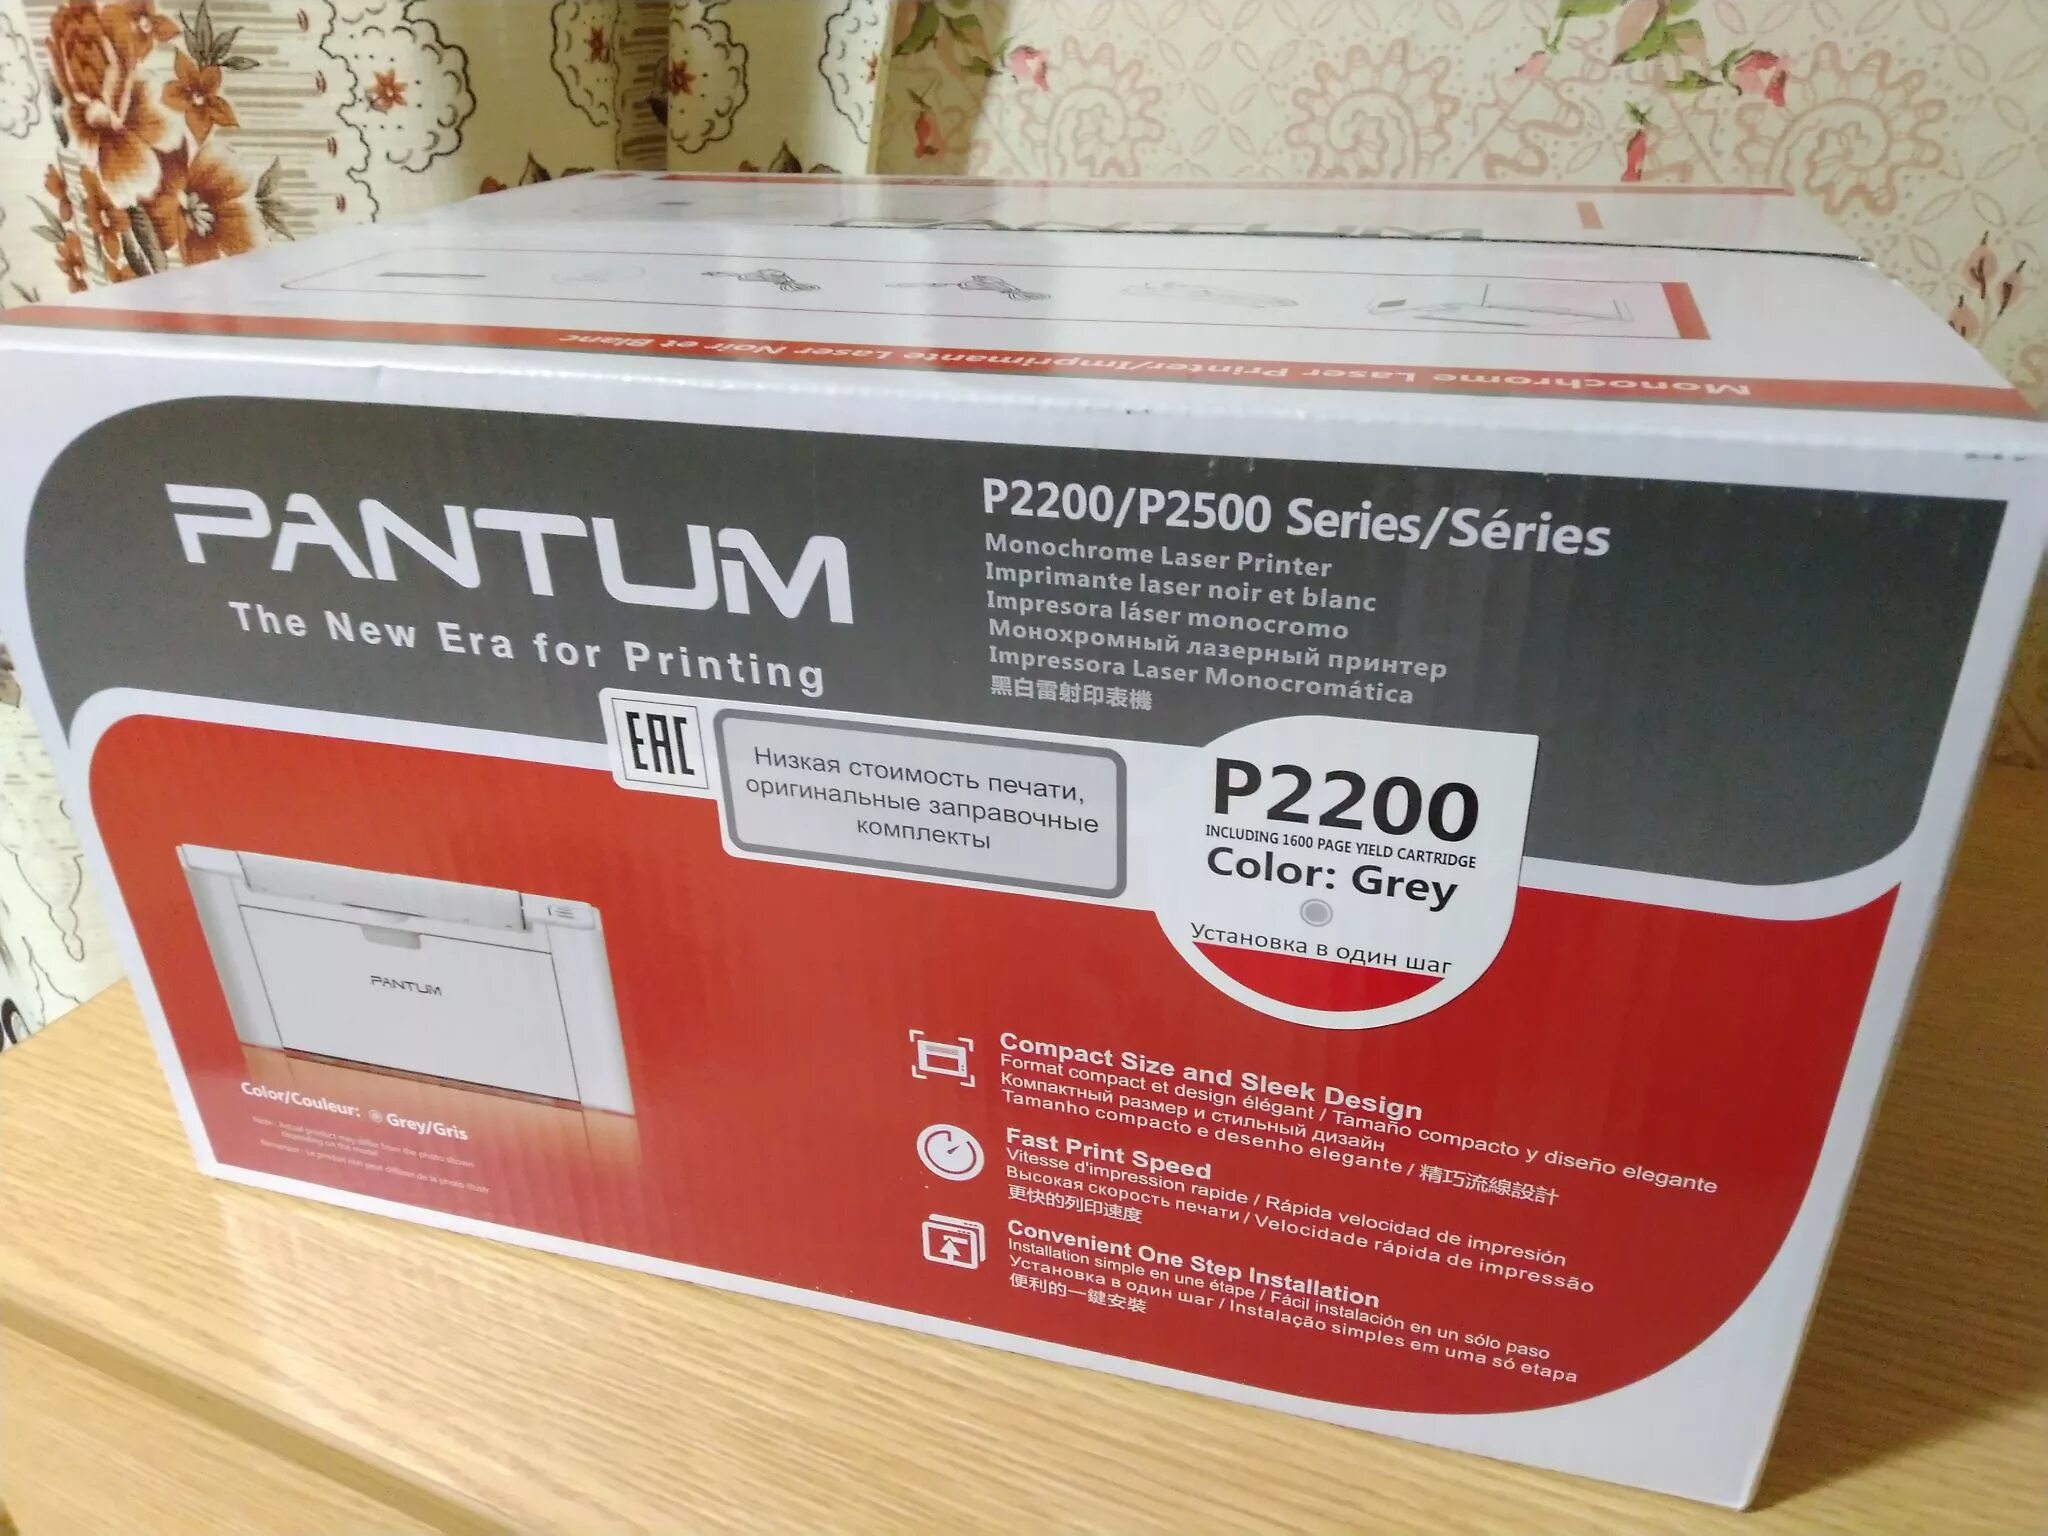 Pantum p2200 series драйвера. Принтер Pantum p2516. Принтер лазерный Pantum p2200. Pantum принтер Pantum p2200. Картридж для принтера Pantum p2200.